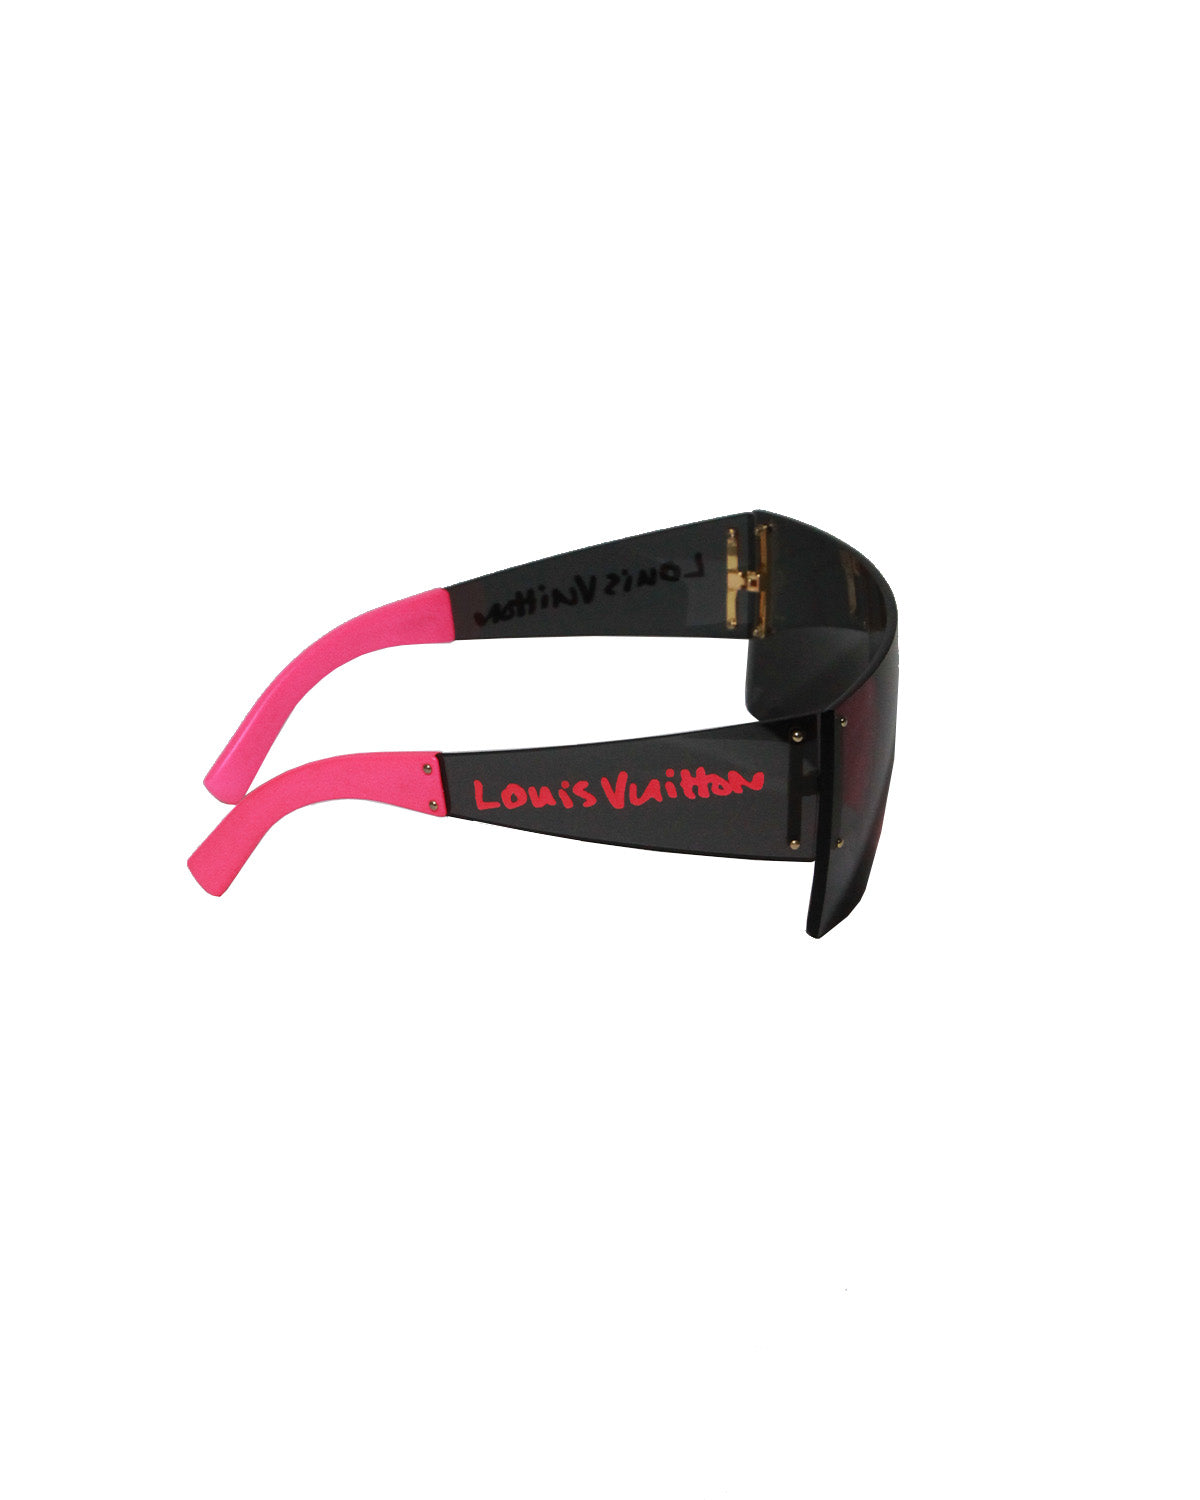 Sunglasses Graffiti Stephen Sprouse Louis Vuitton Pink